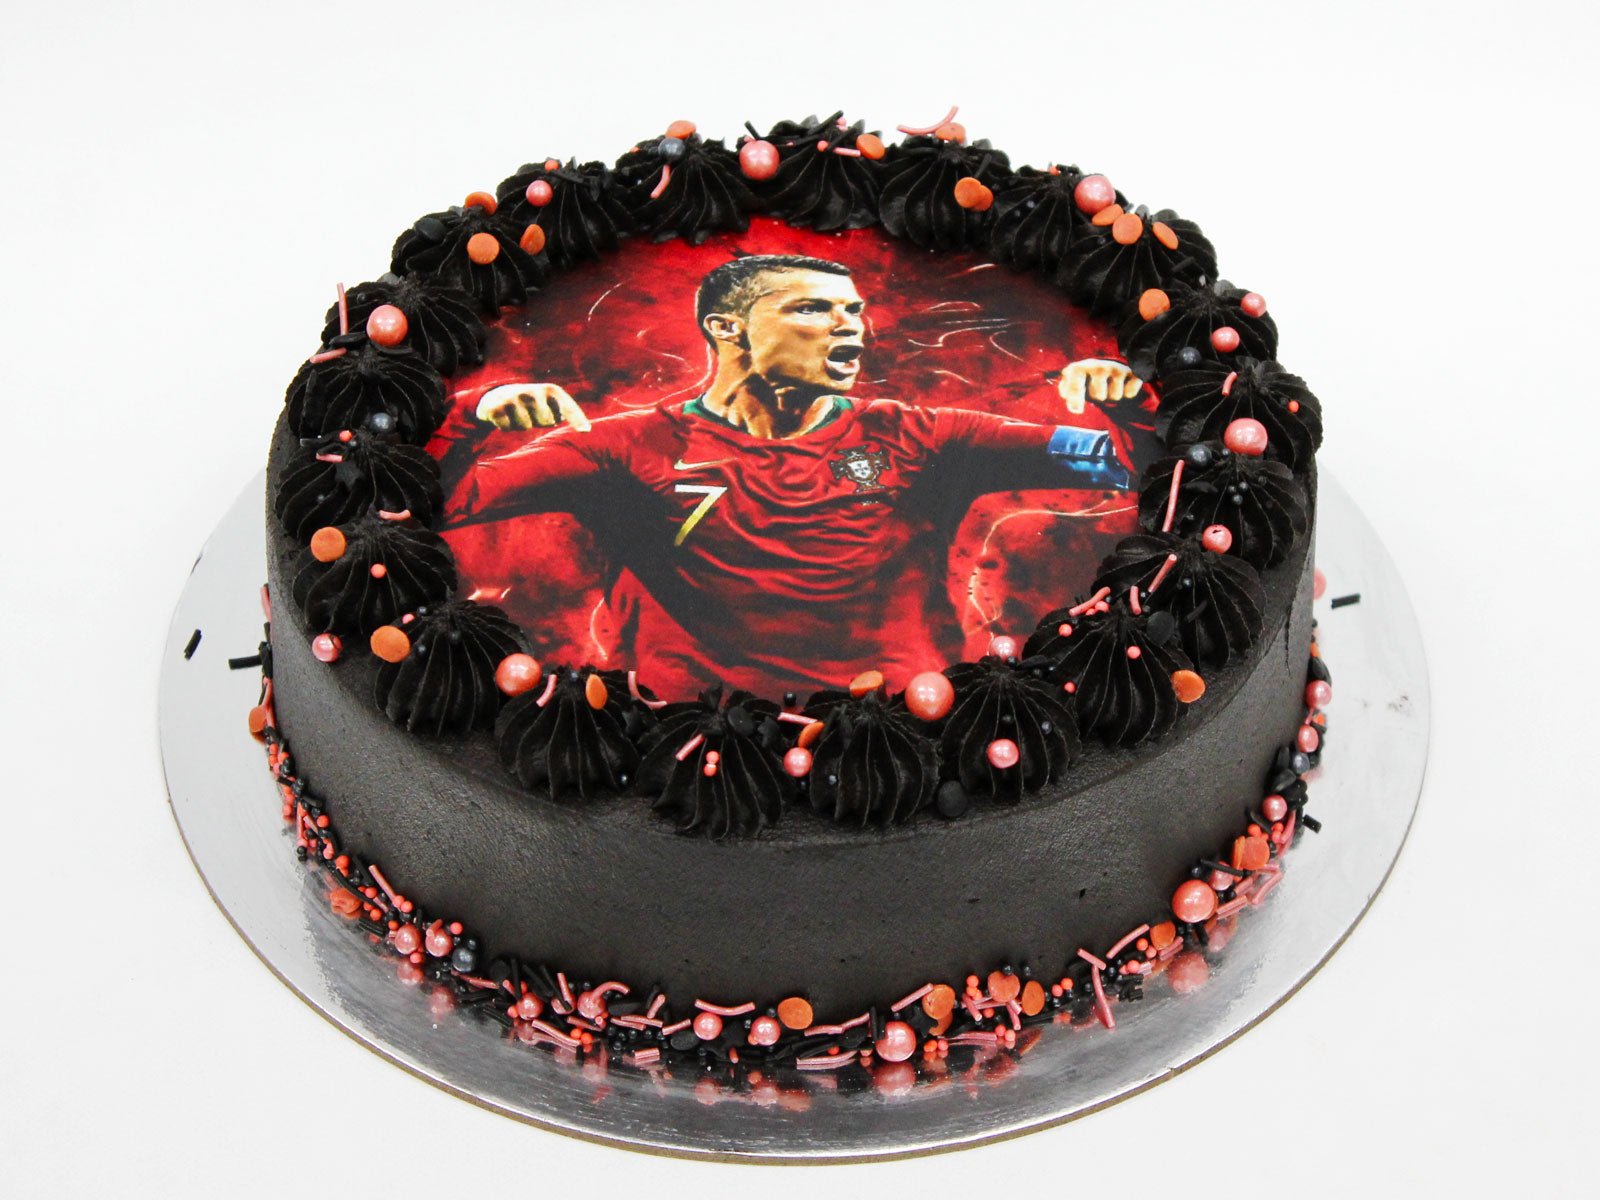 Cristiano Ronaldo Birthday Cake Ideas Images (Pictures) in 2023 | Cristiano ronaldo  birthday, Ronaldo birthday, Ronaldo